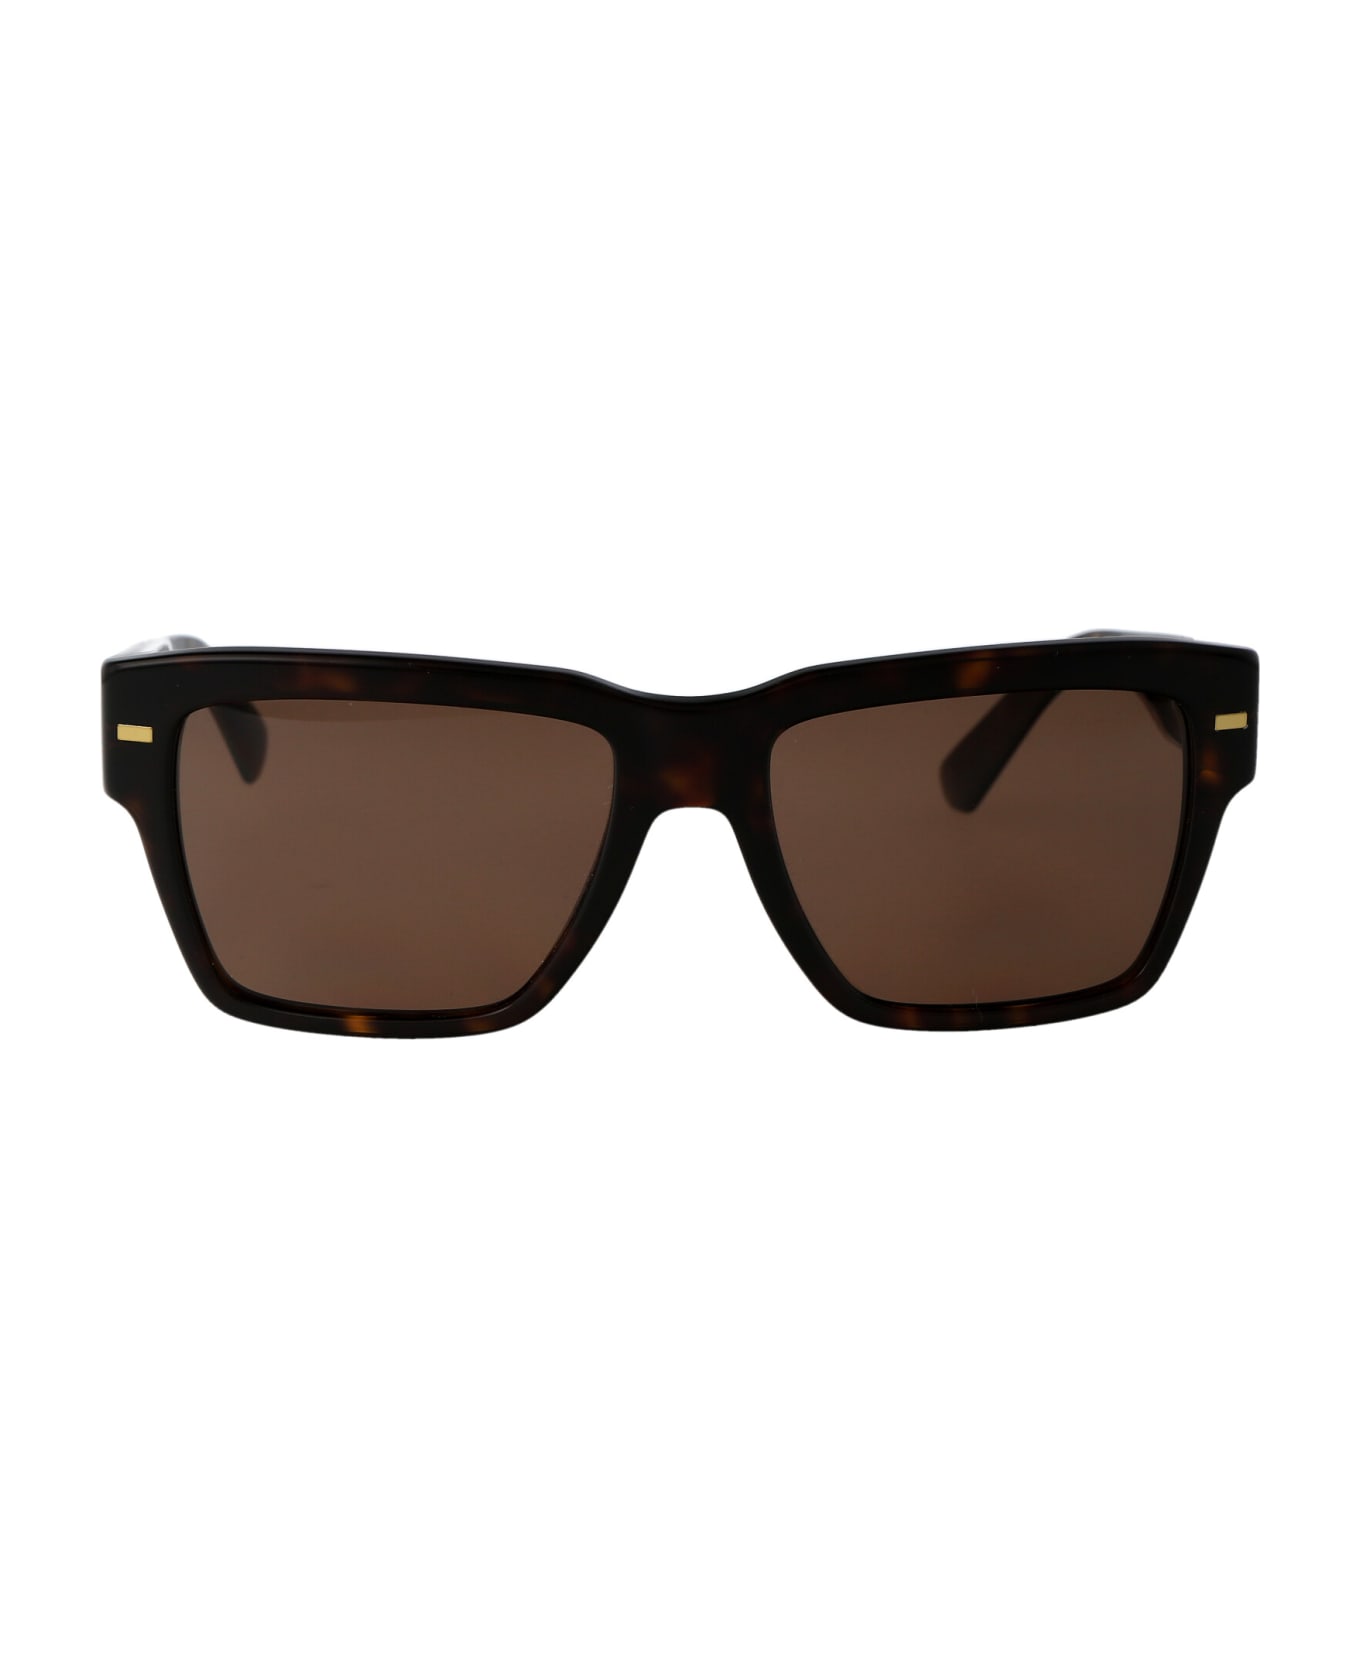 Dolce & Gabbana Eyewear 0dg4431 Sunglasses - 502/73 HAVANA サングラス